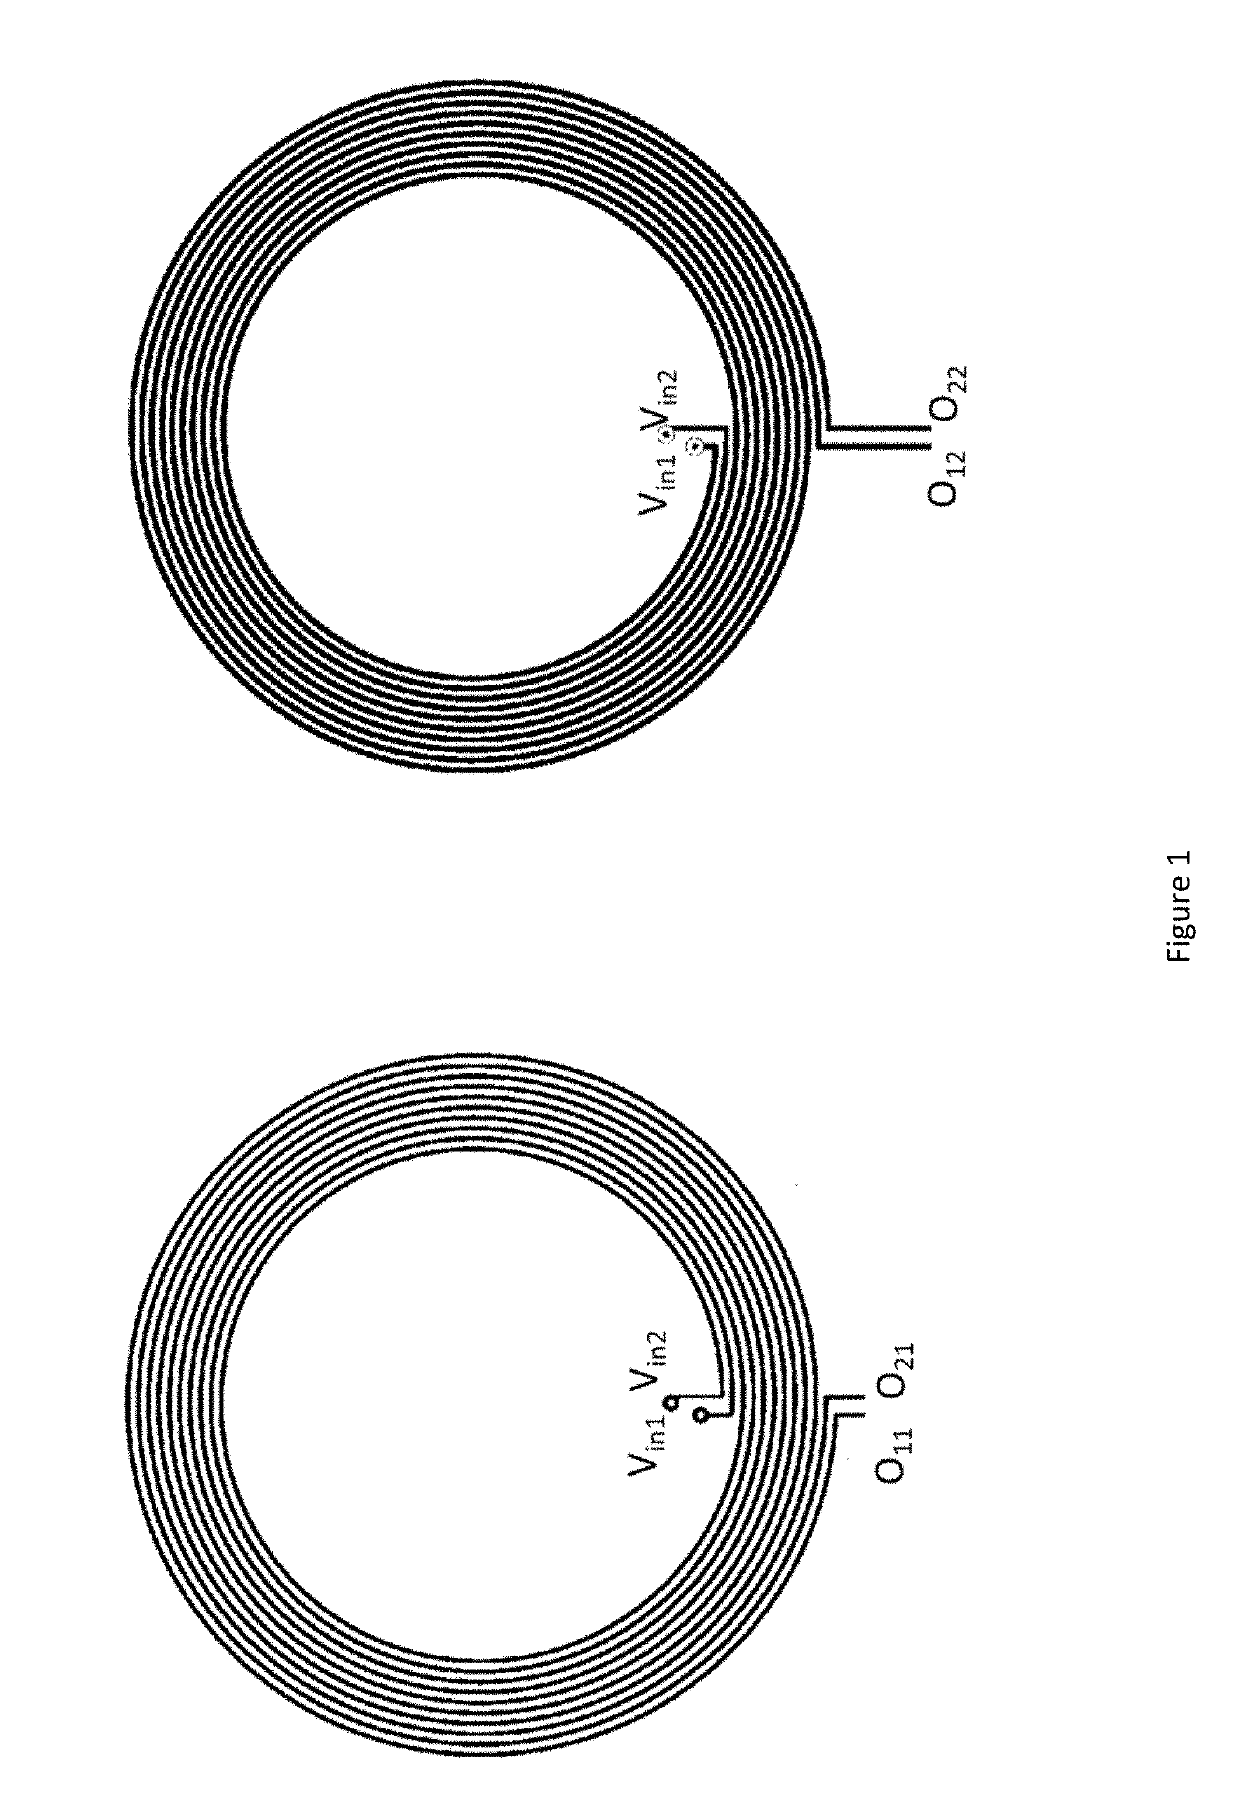 Multi cycle dual redundant angular position sensing mechanism and associated method of use for precise angular displacement measurement